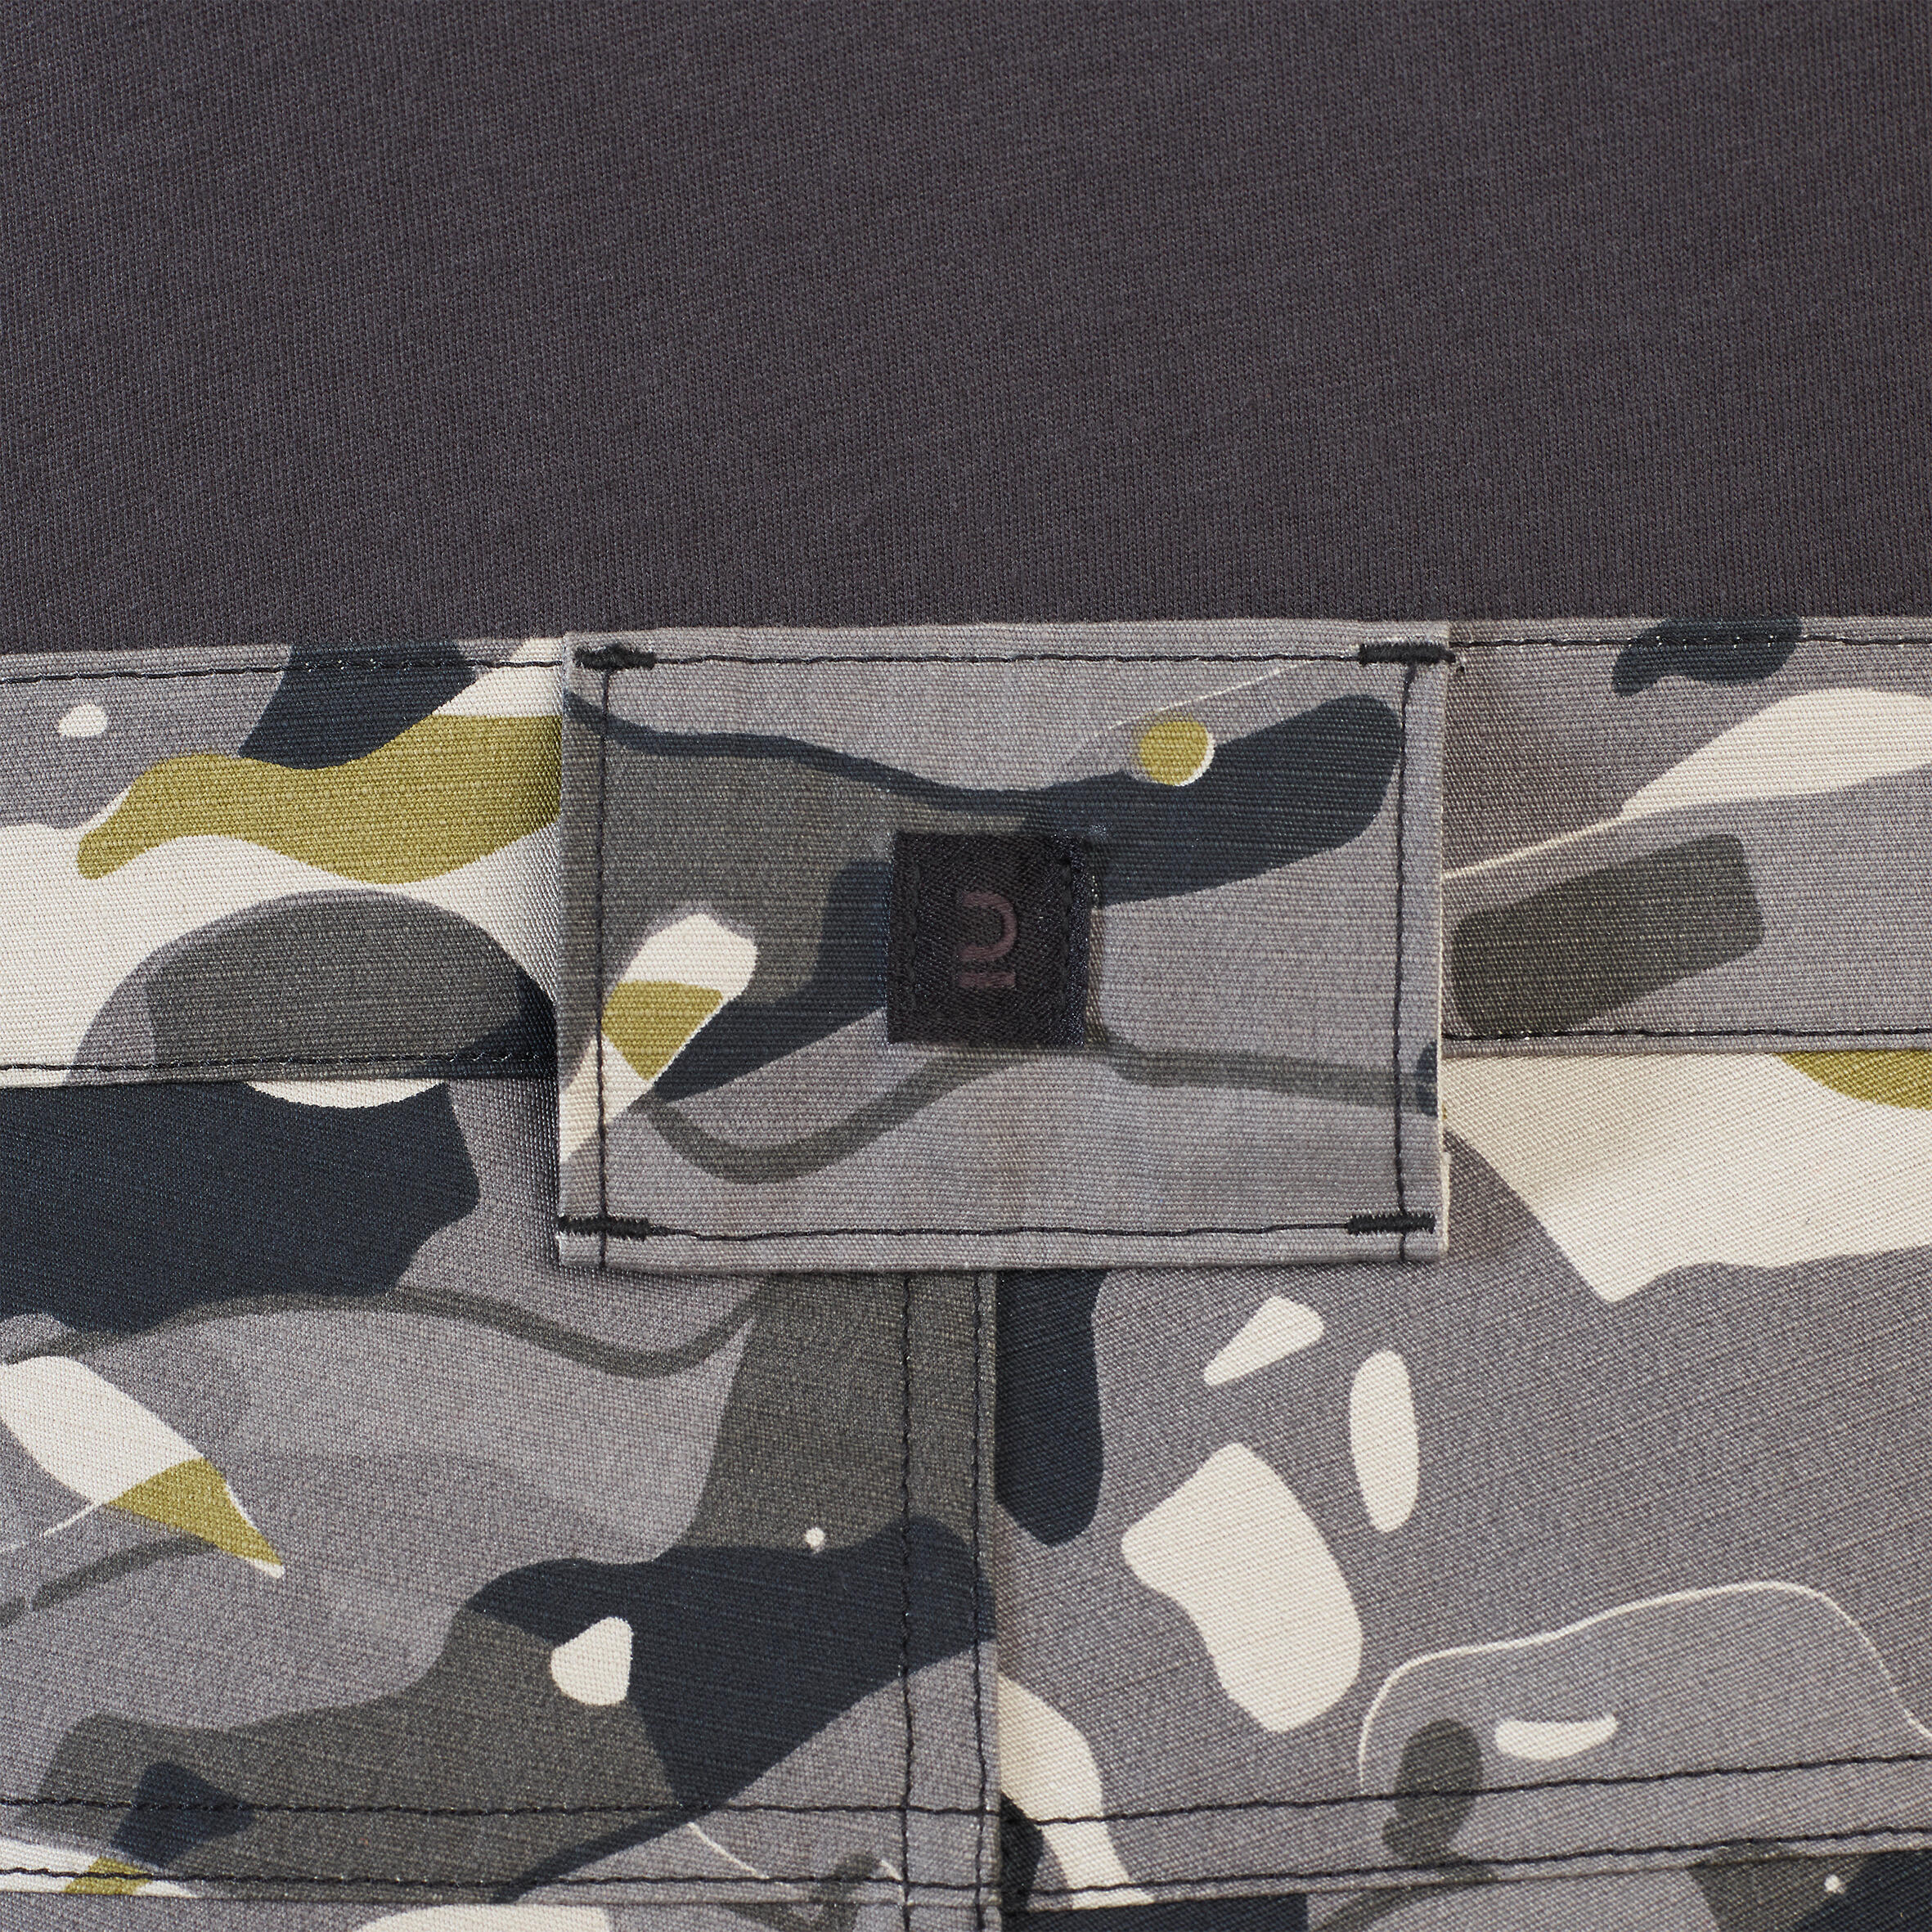 Bermuda shorts 500 - Woodland V1 mineral grey LTD camouflage 13/13